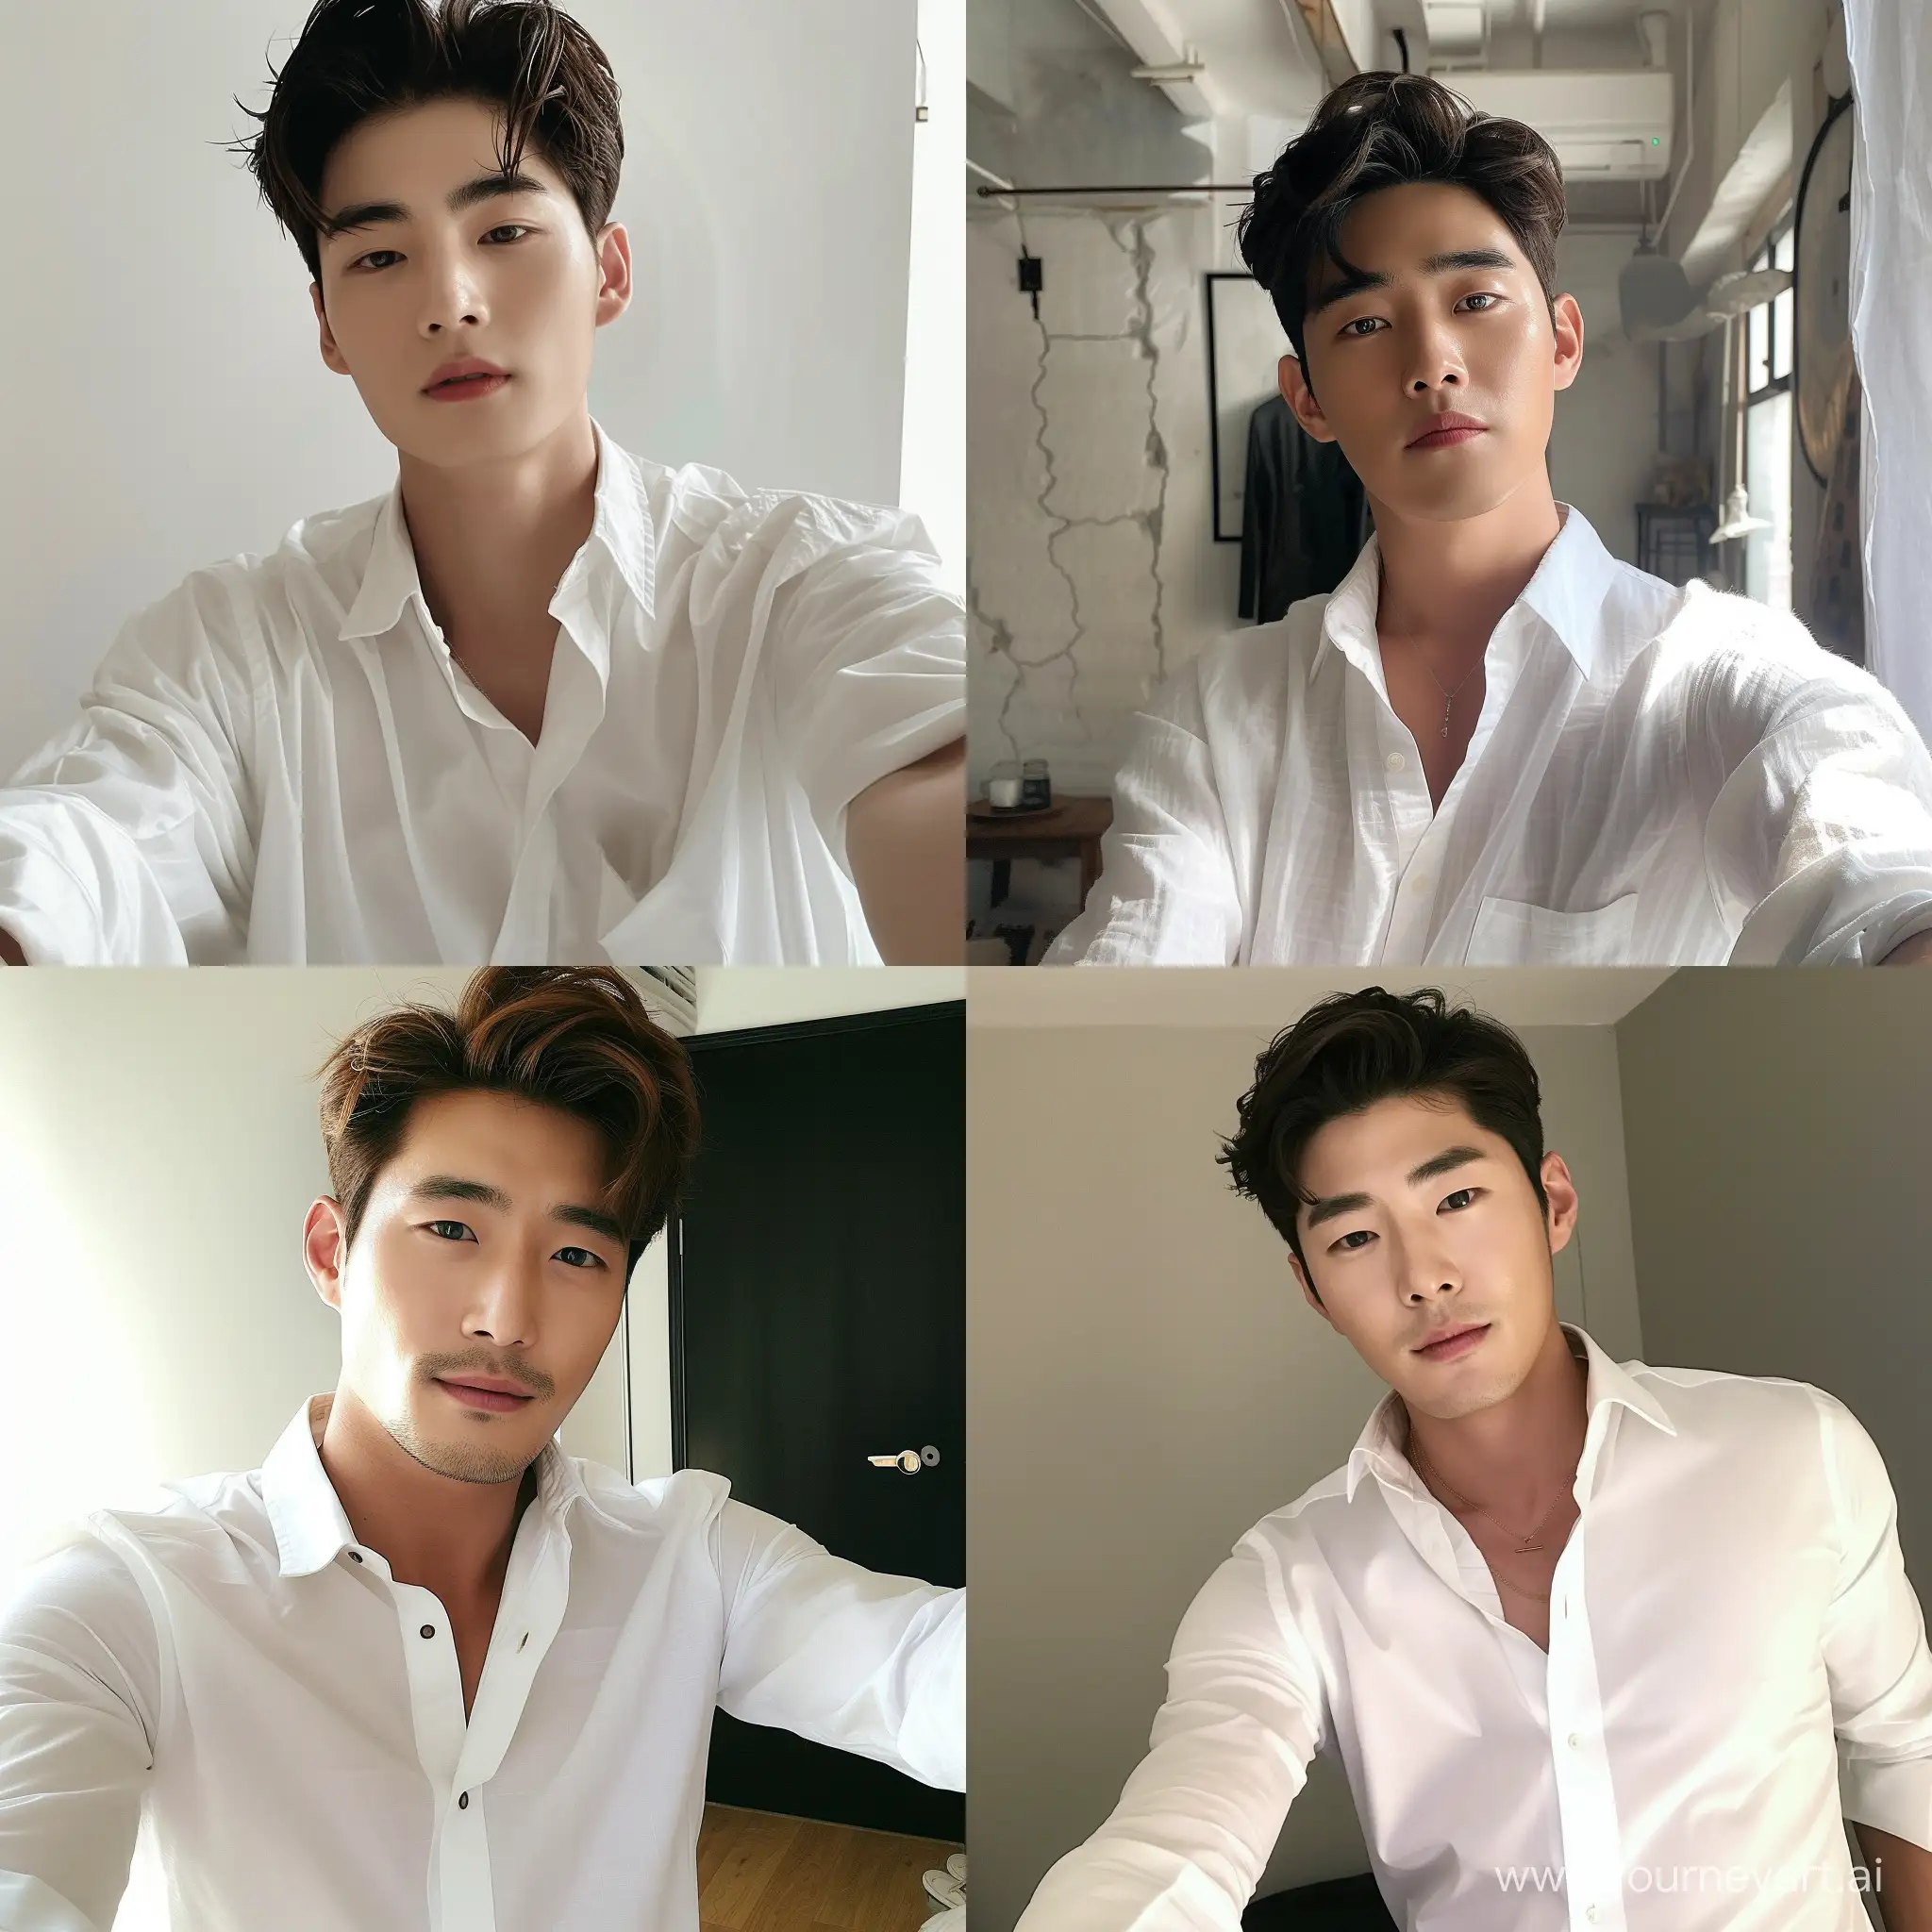 Handsome Korean guy, taking a selfie, in a white shirt.